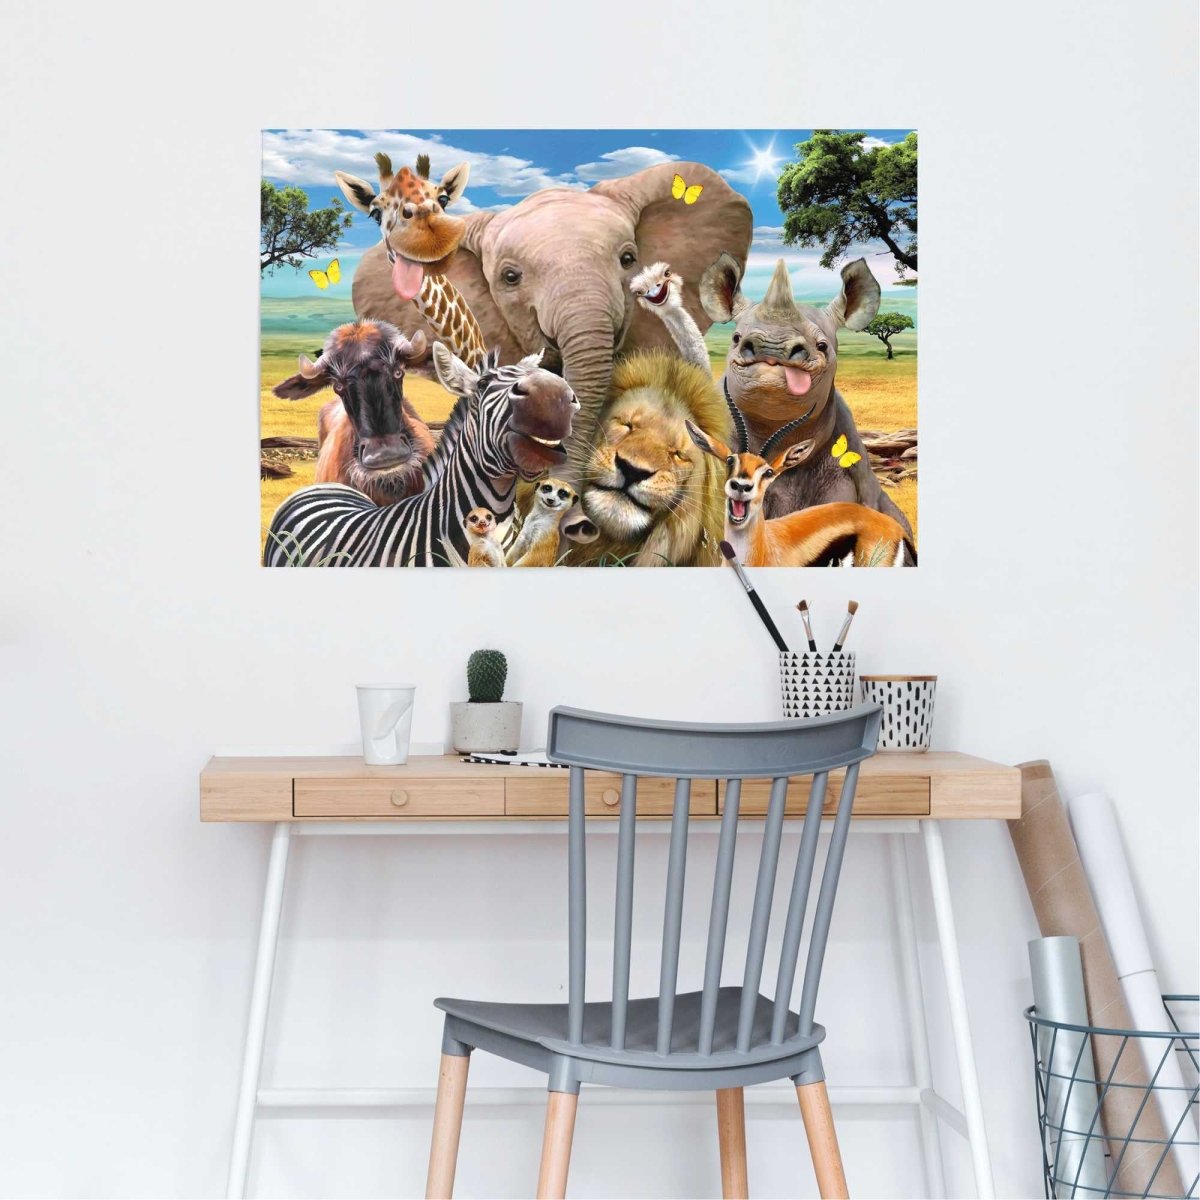 Poster Safari - Fun! 61x91,5 - Reinders